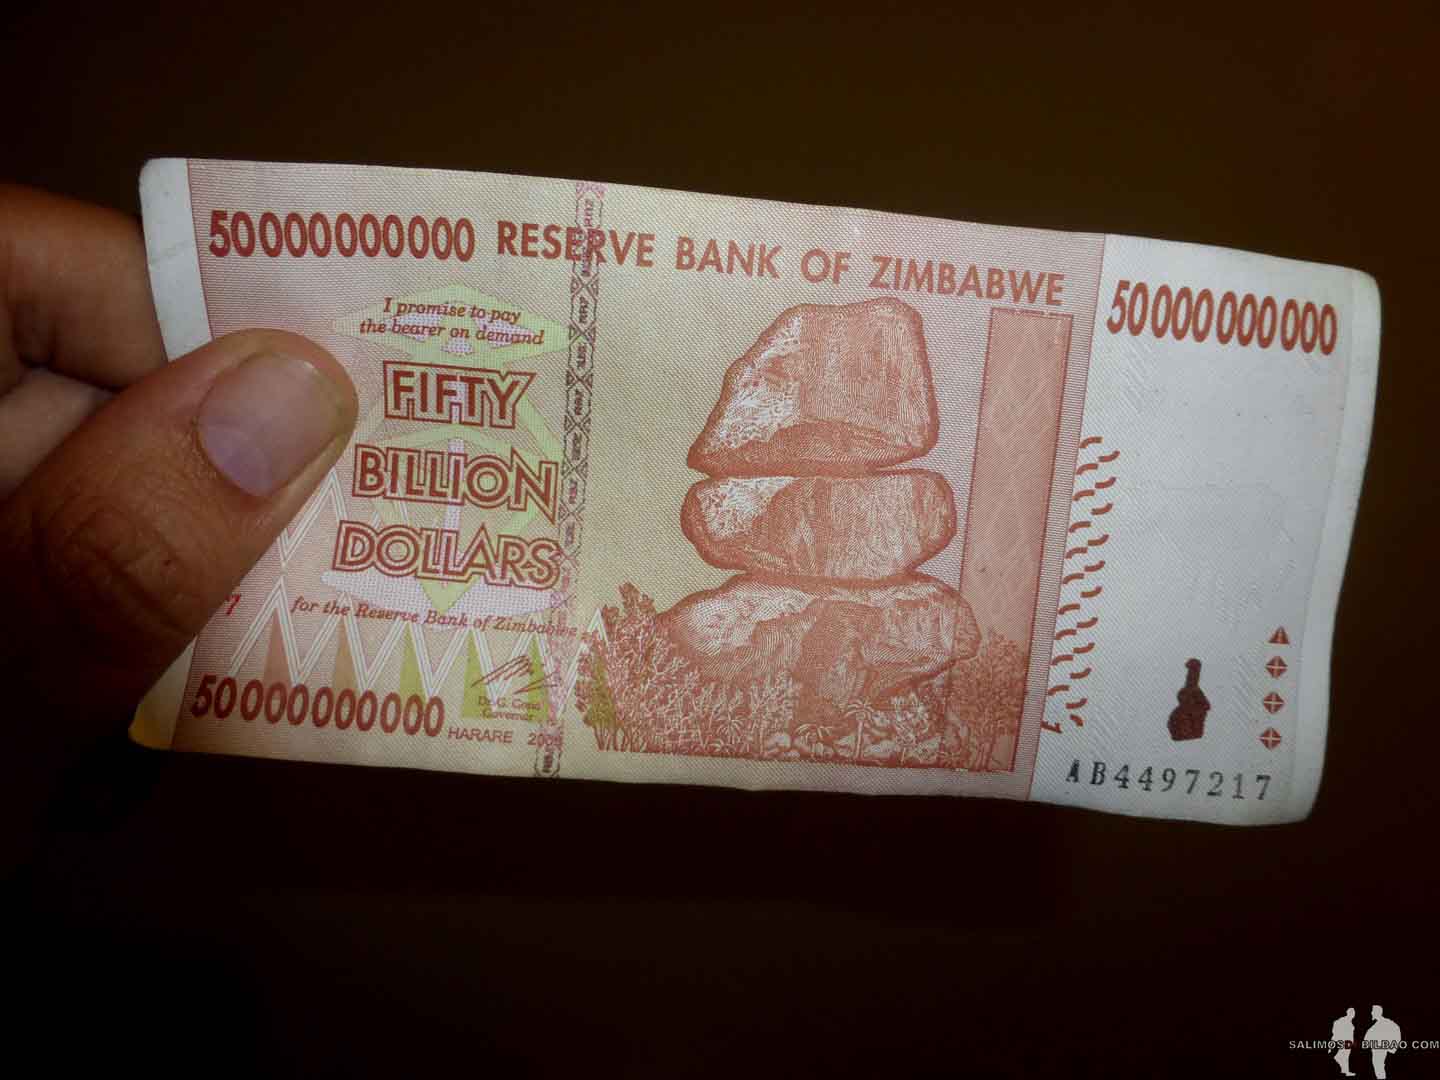 BIllete de 50 billones de dólares de Zimbabue Fifty Billion dollar note